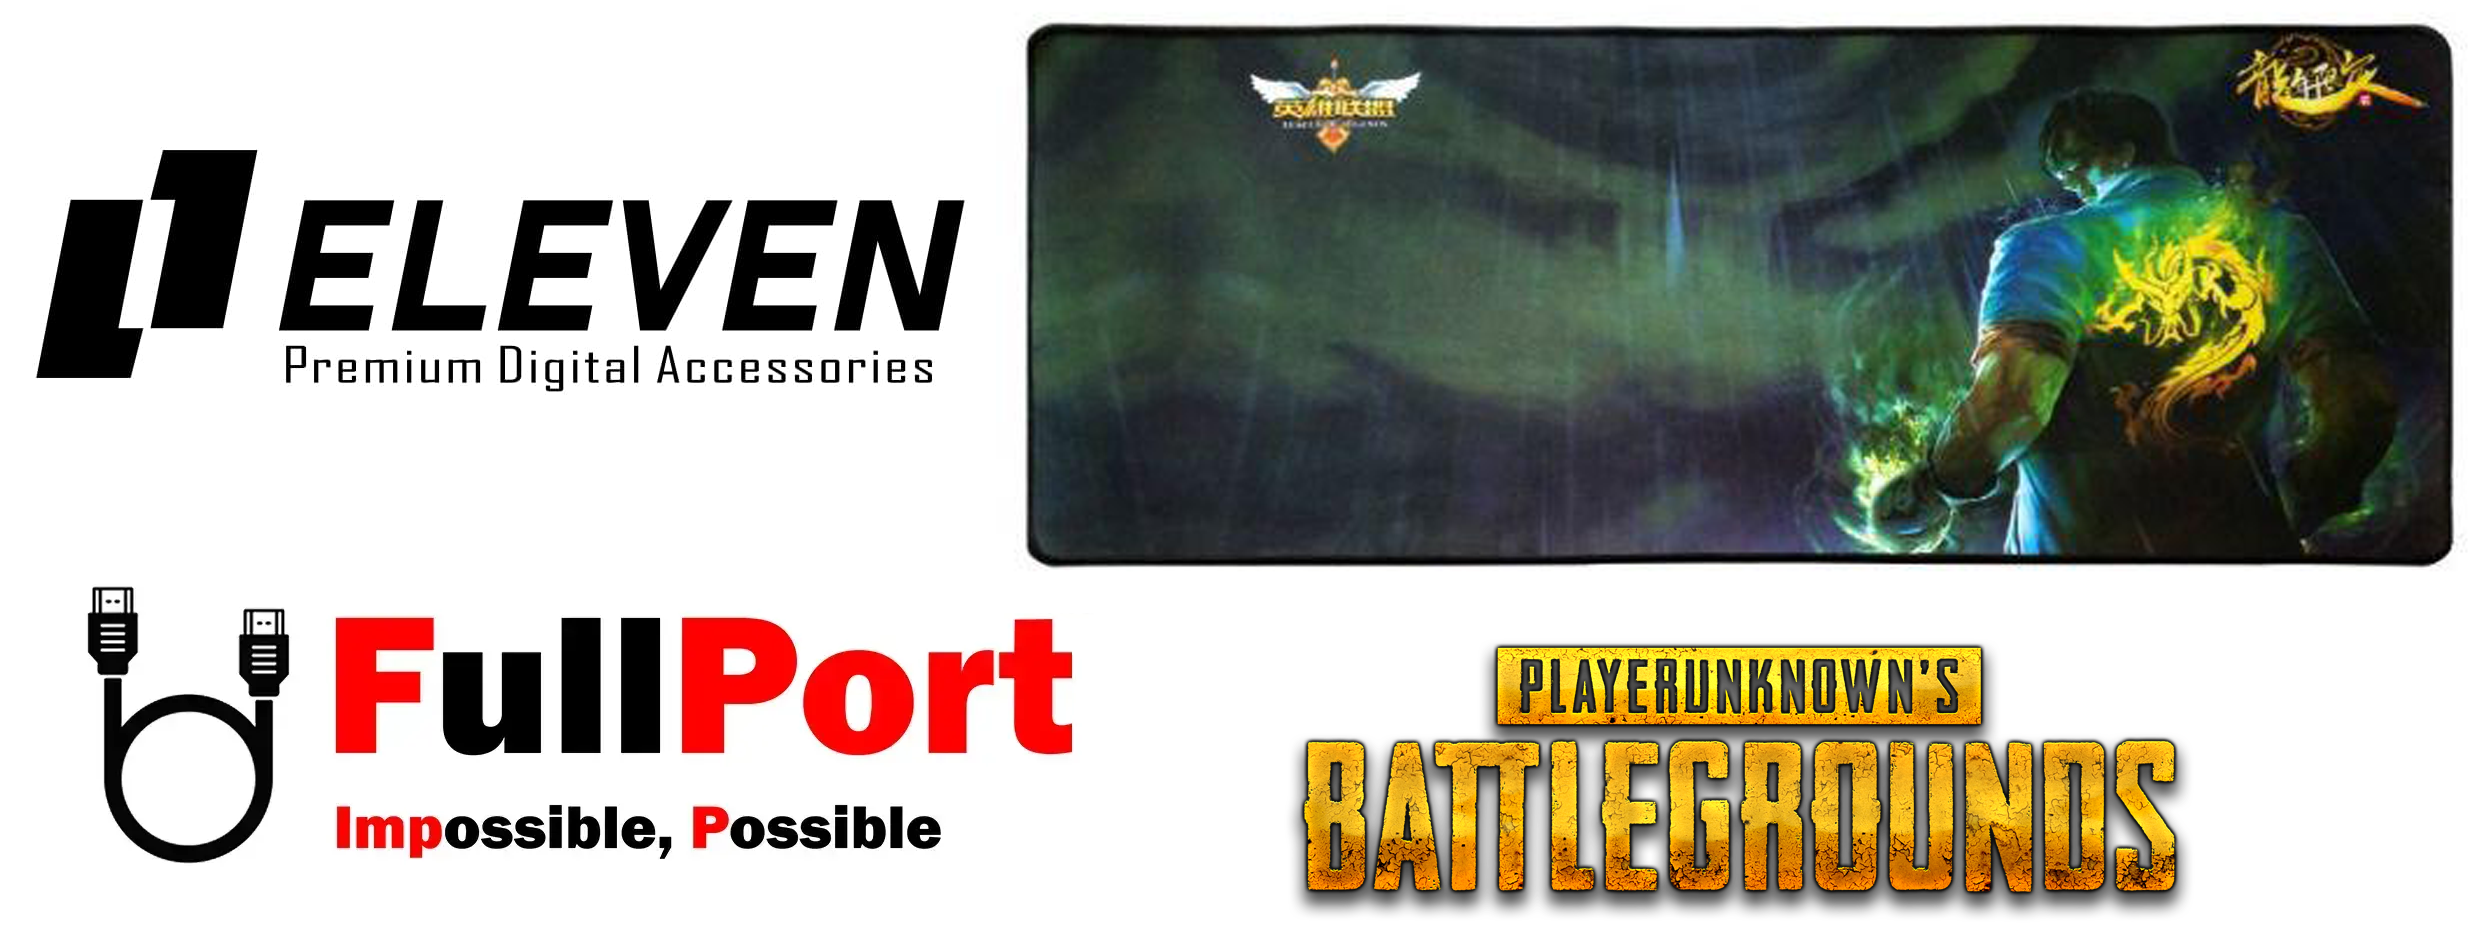 خرید اینترنتی پدموس مخصوص بازی | Gameing ایلون | ELEVEN مدل GMP3070 طرح Battlegrounds League OF Legends Lee Sin از فروشگاه اینترنتی فول پورت